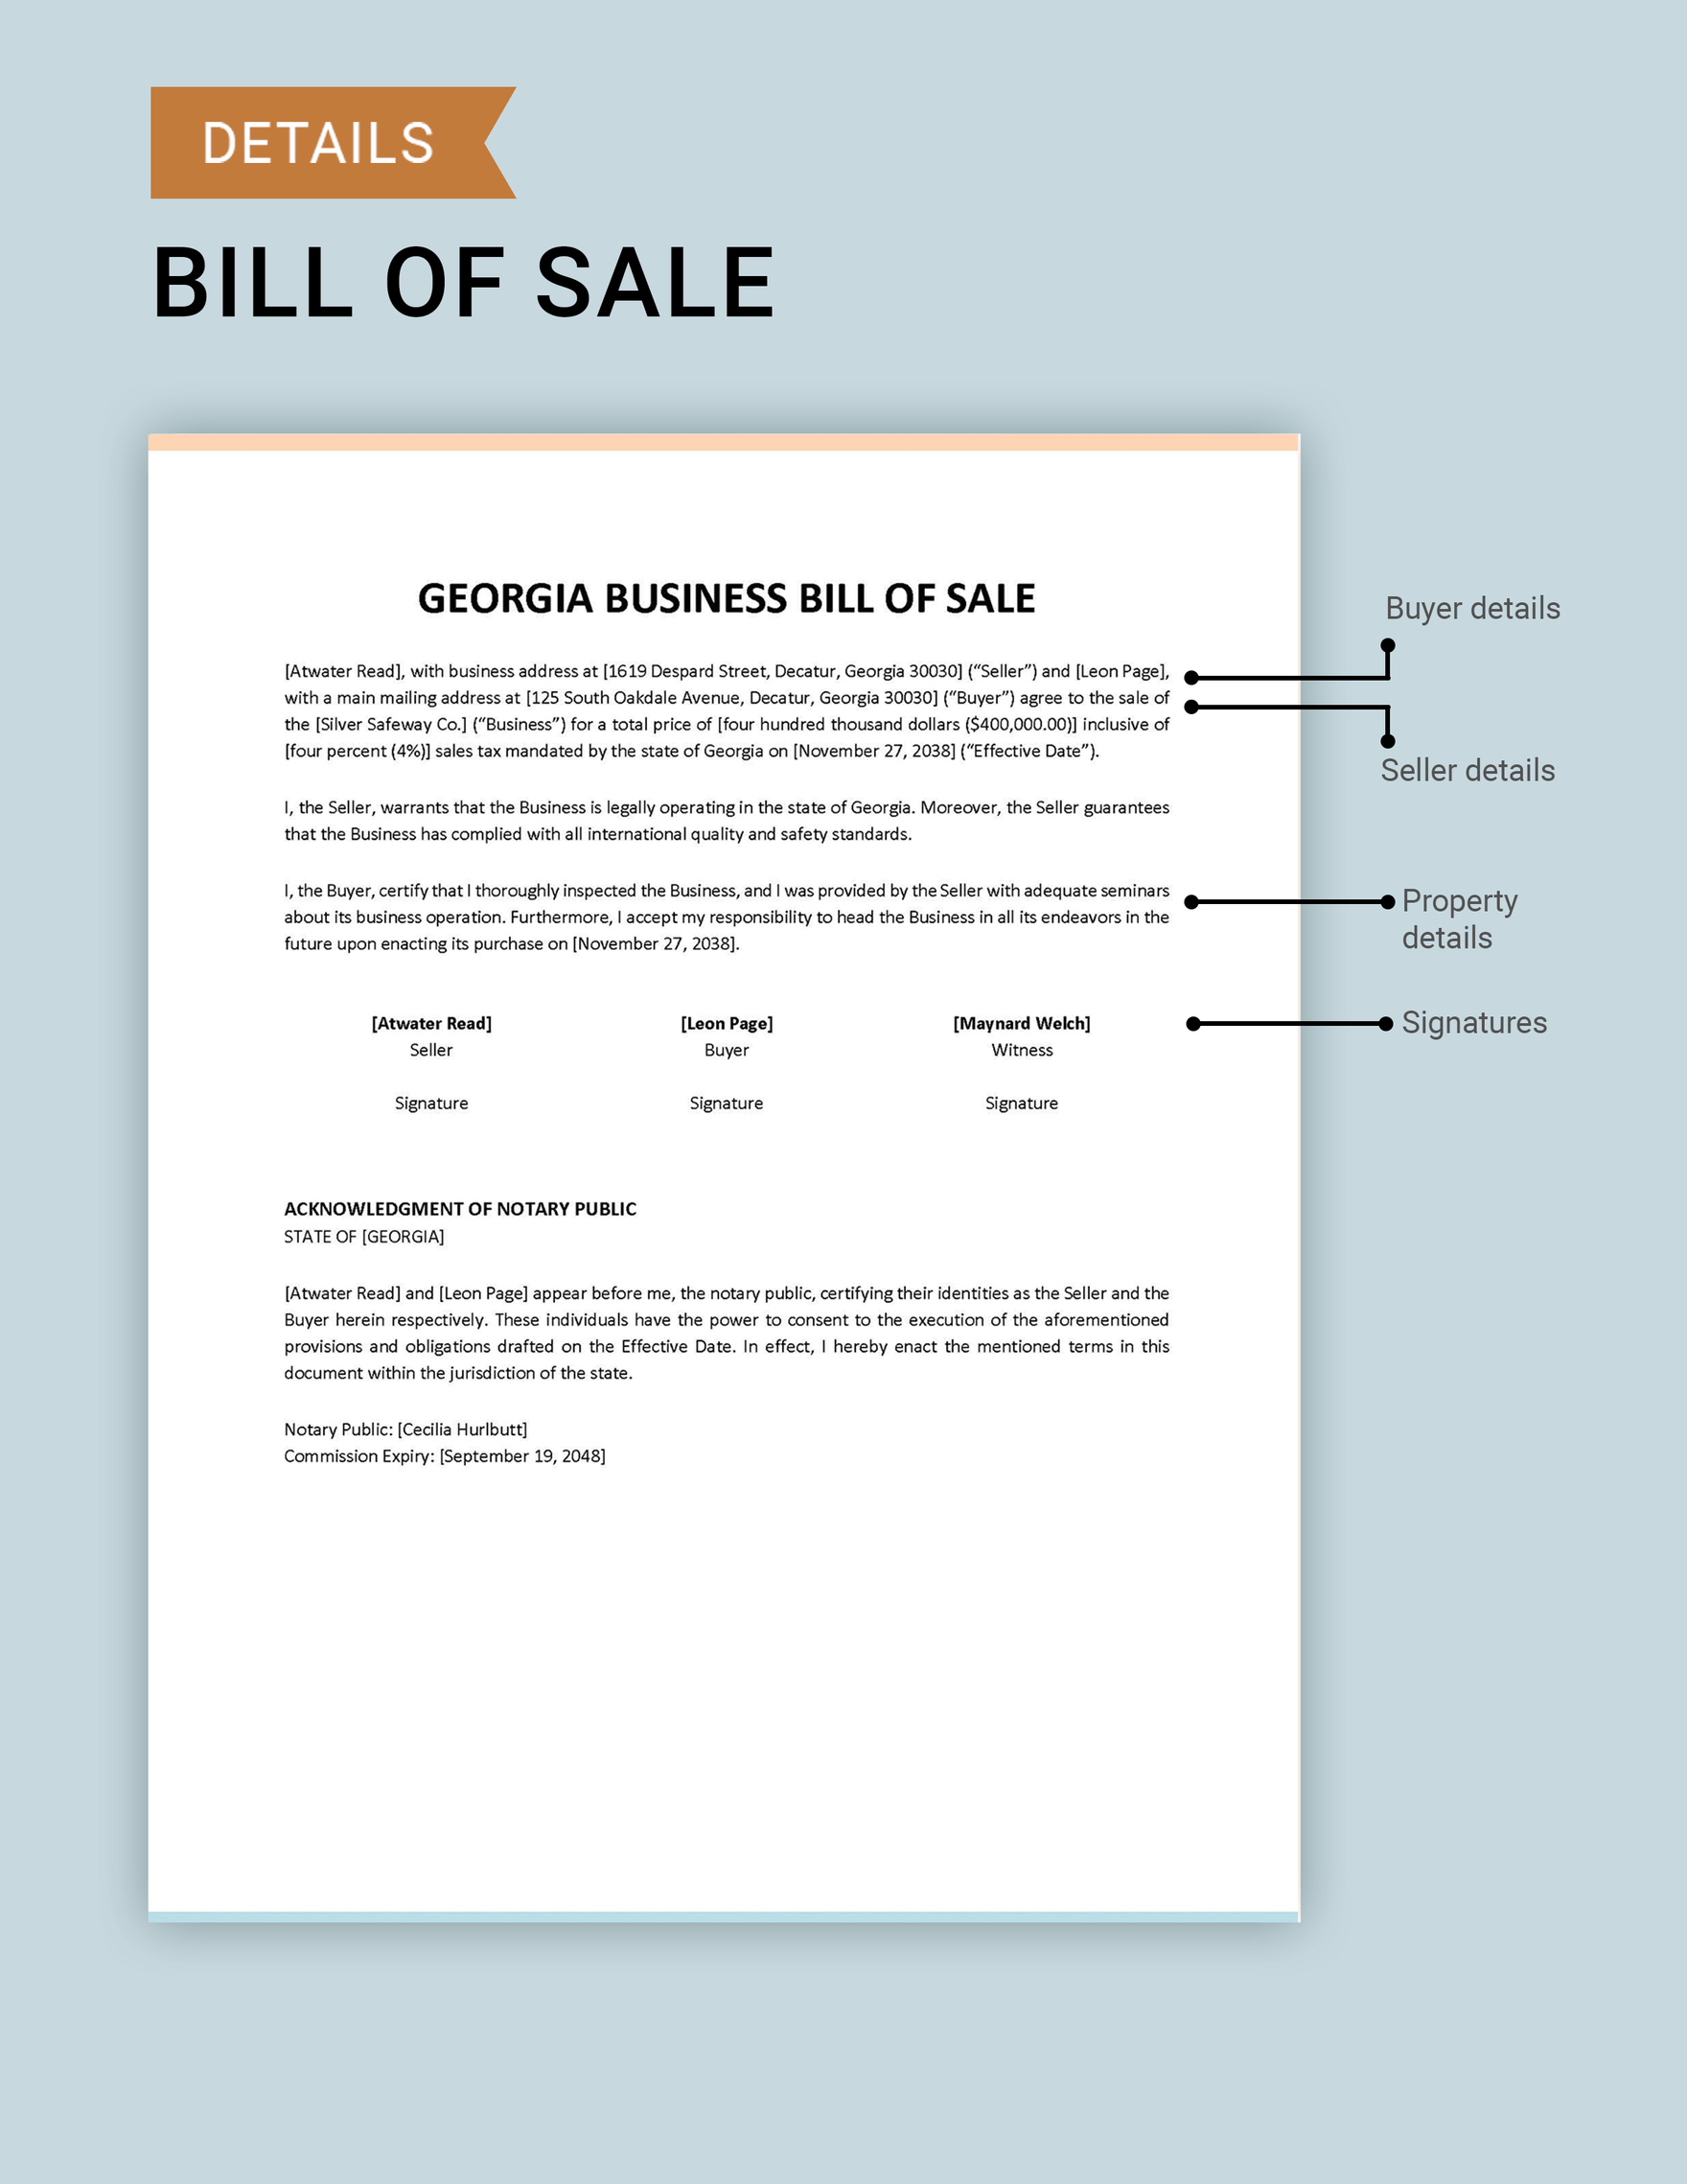 Georgia Business Bill of Sale Template